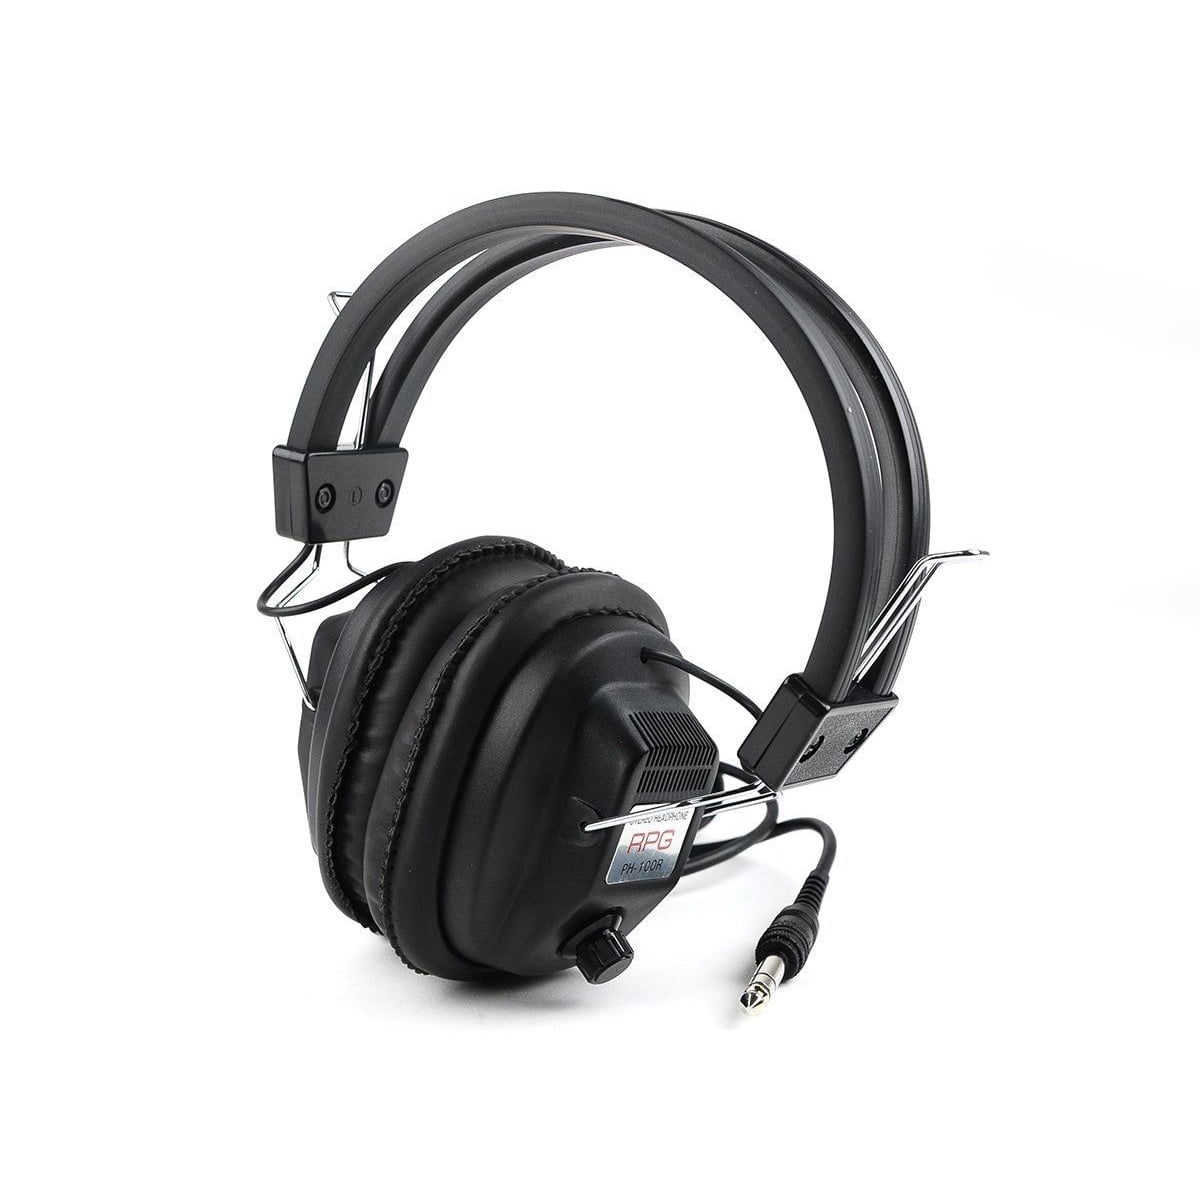 Garrett Metal Detectors MS-2 Headphones Land-Use 1/4" stereo plug GAR1627300 